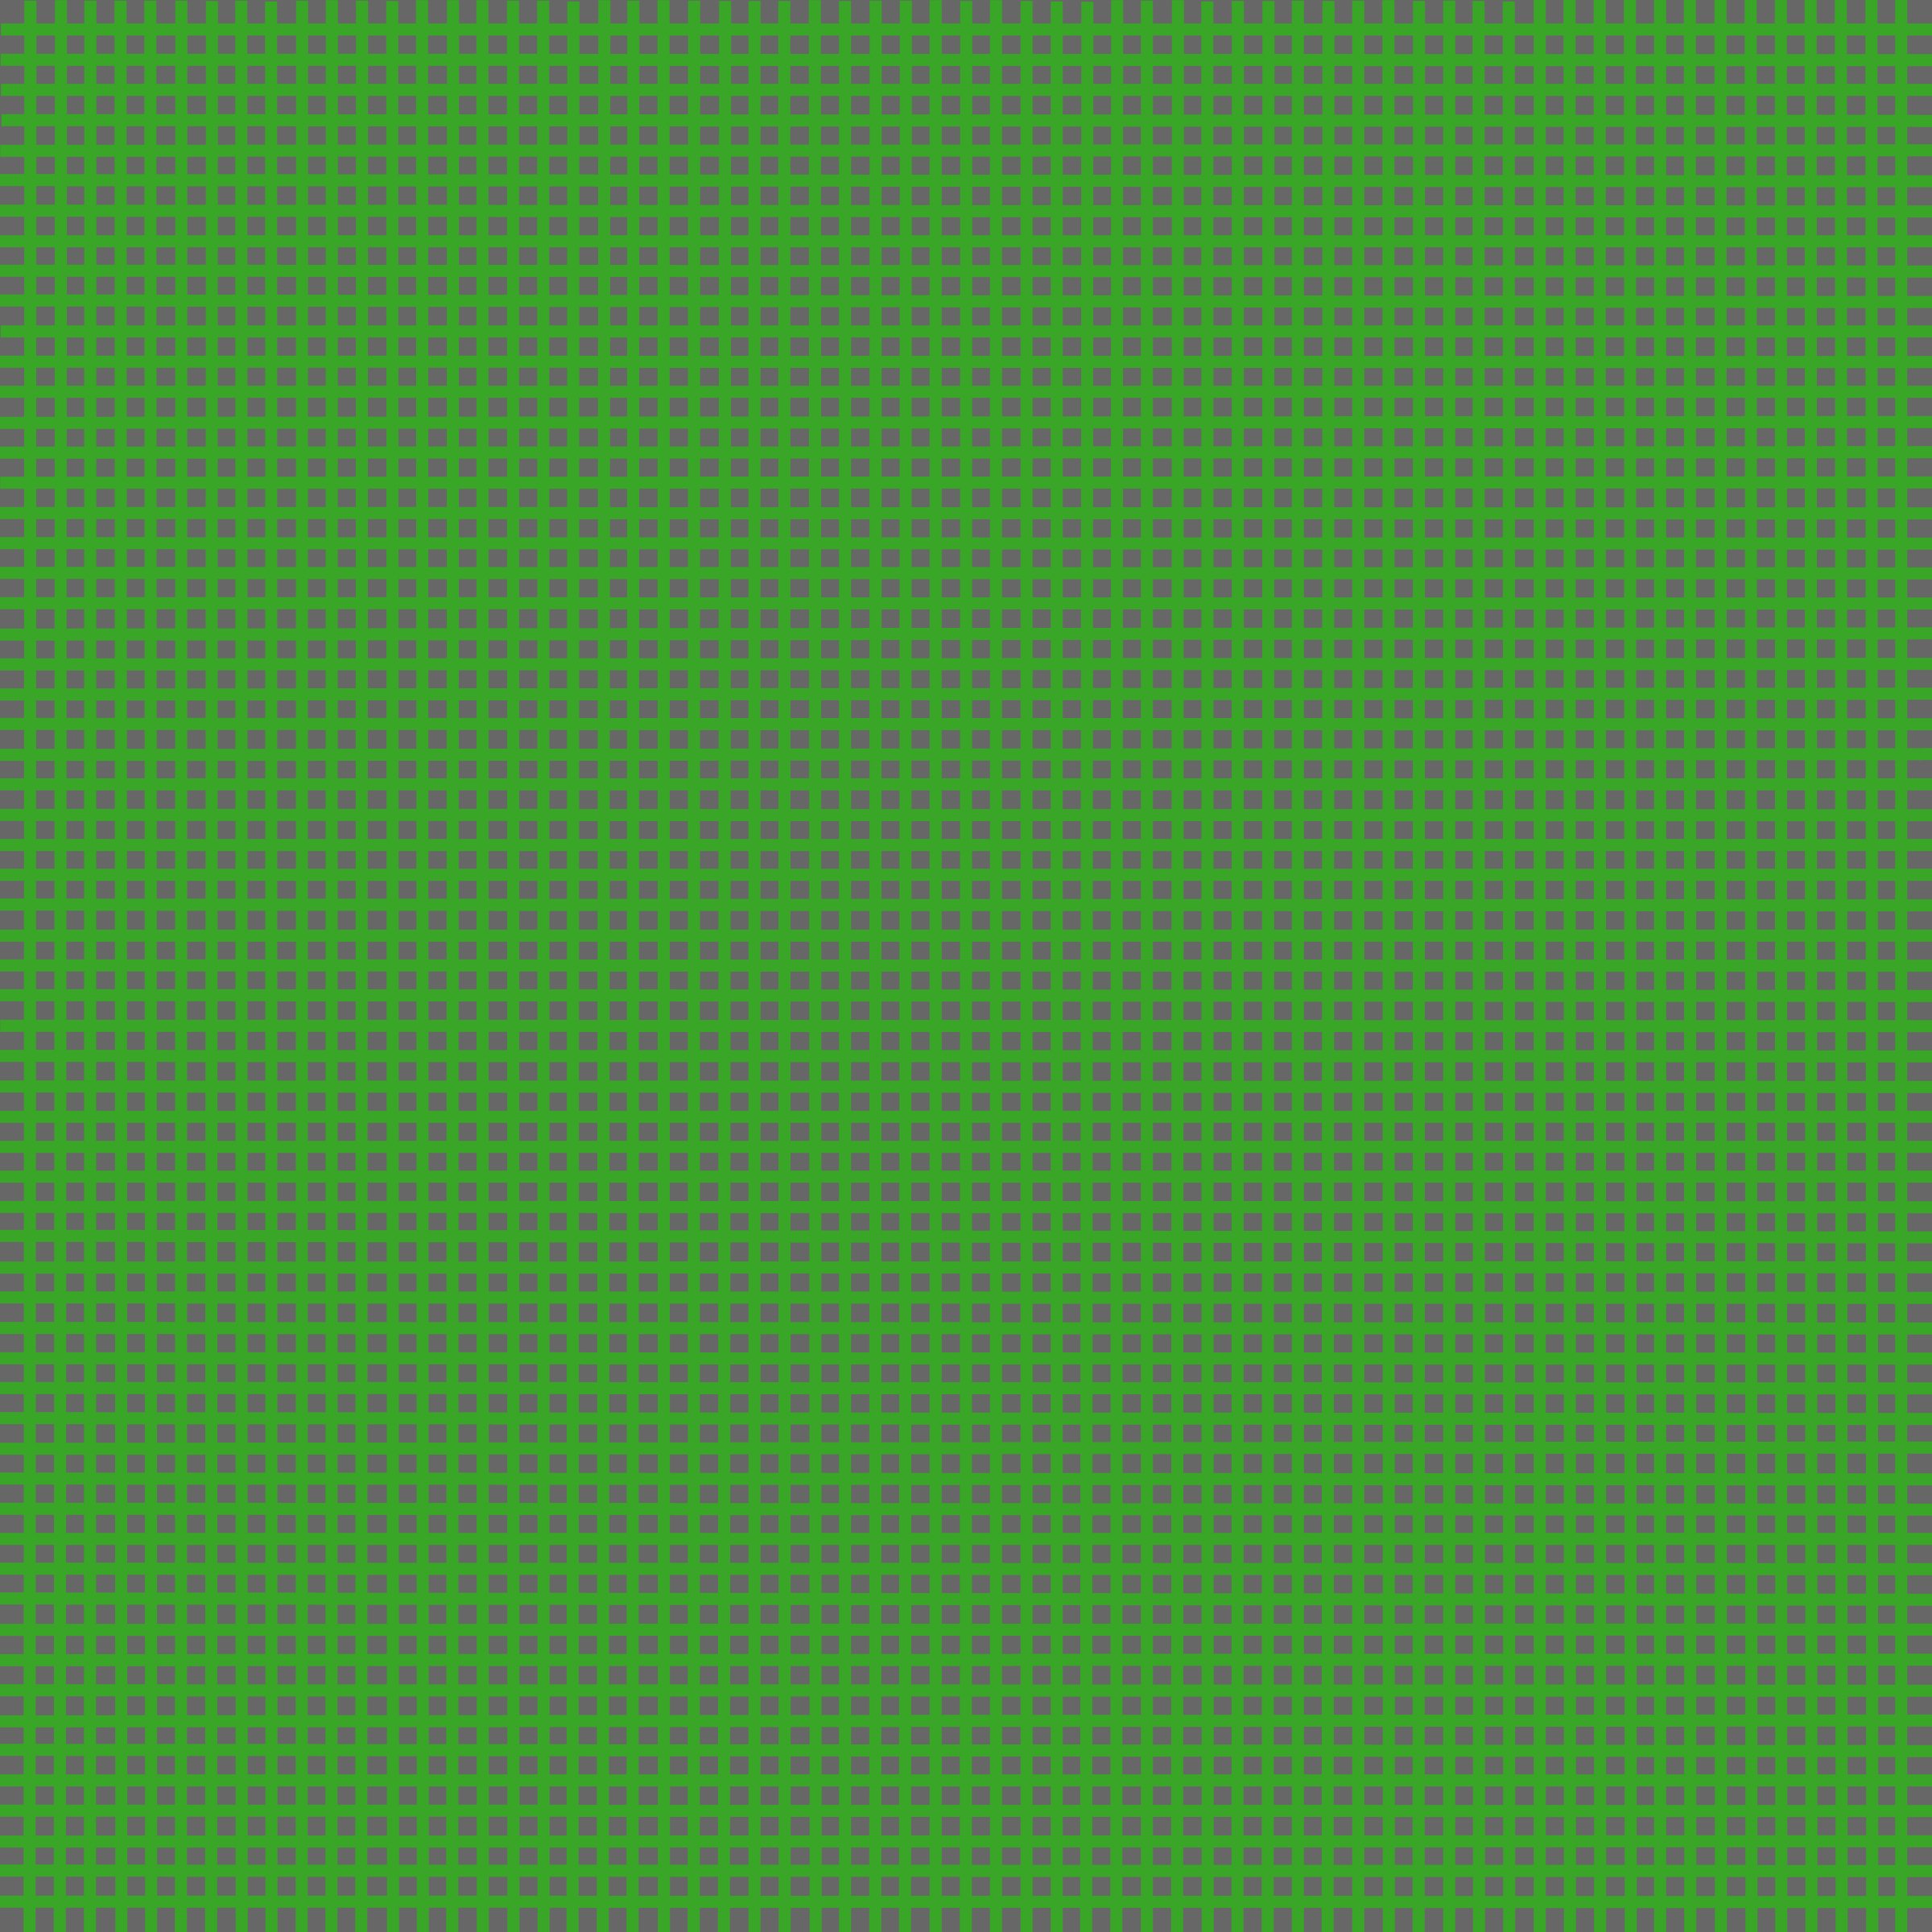 small grid 12 (permanent green).jpg